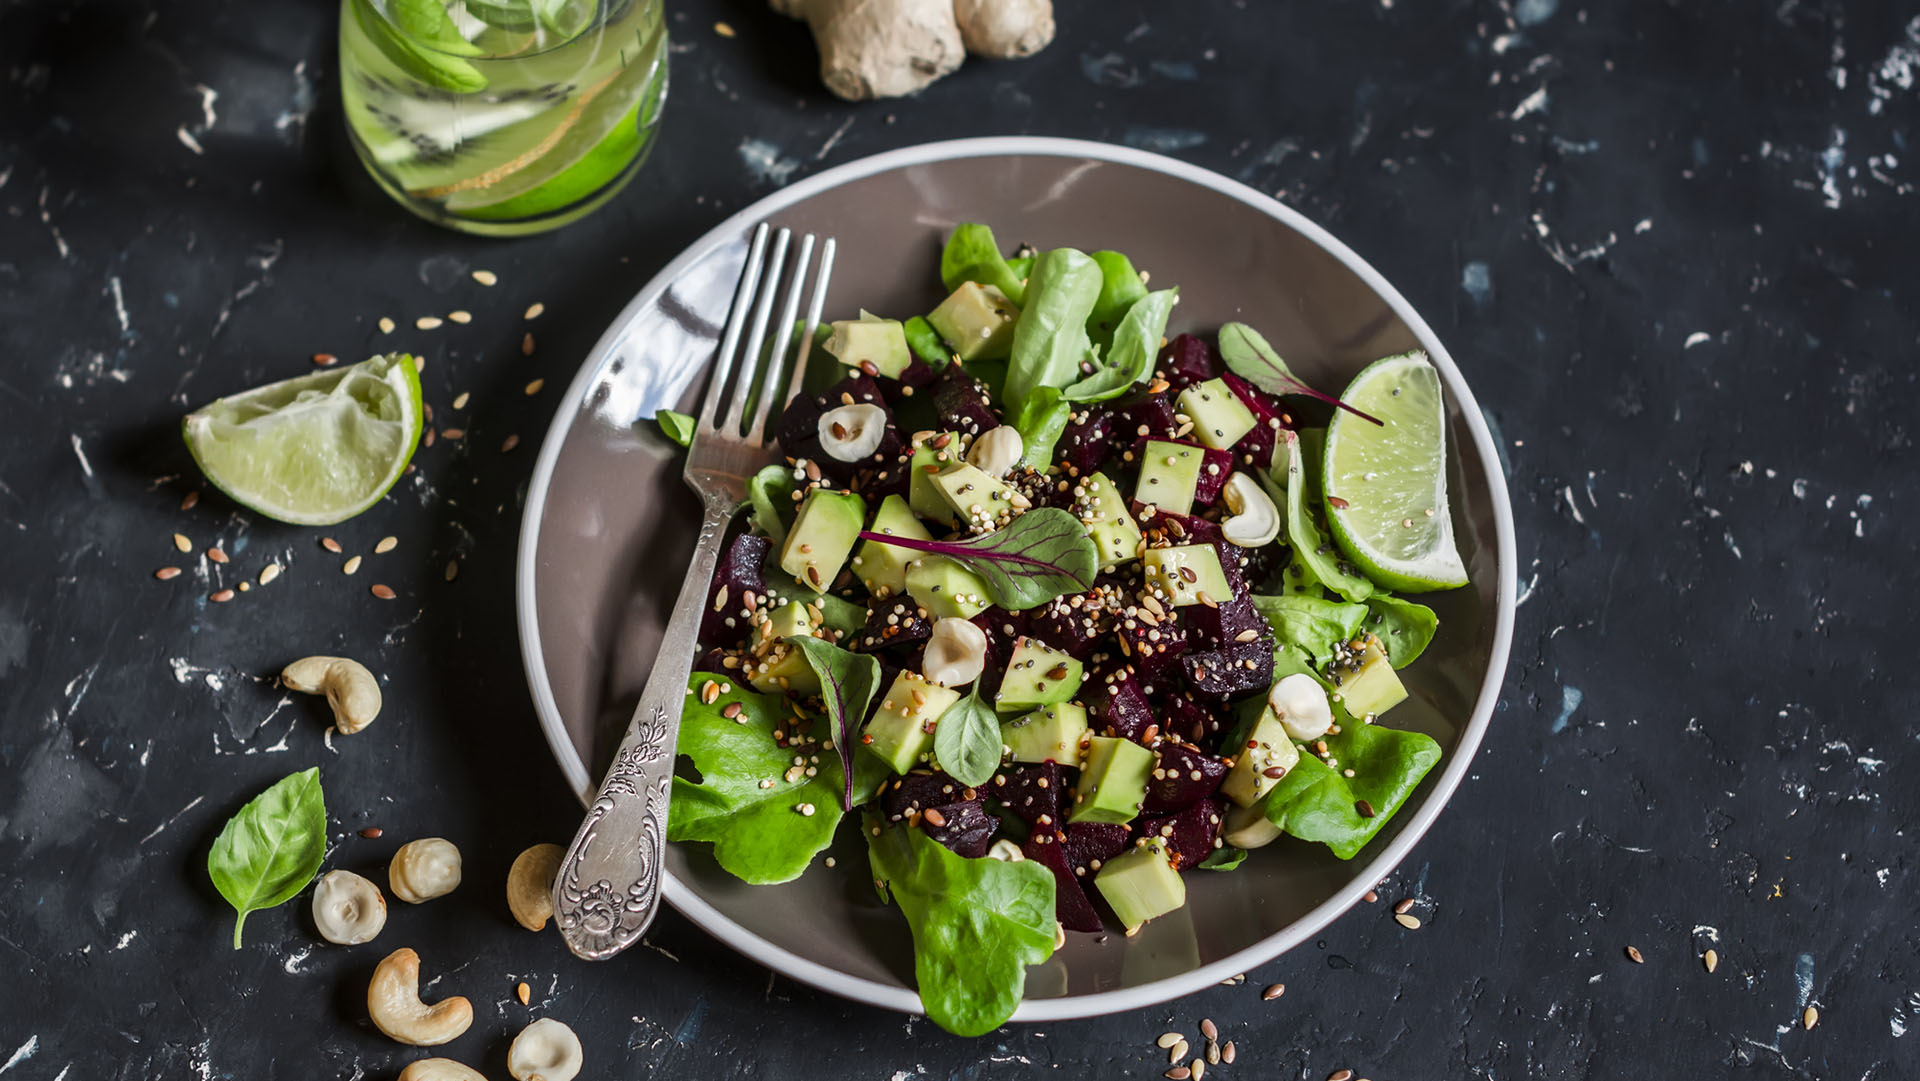 Beet and avocado detox salad. On a dark background. Healthy vegetarian food